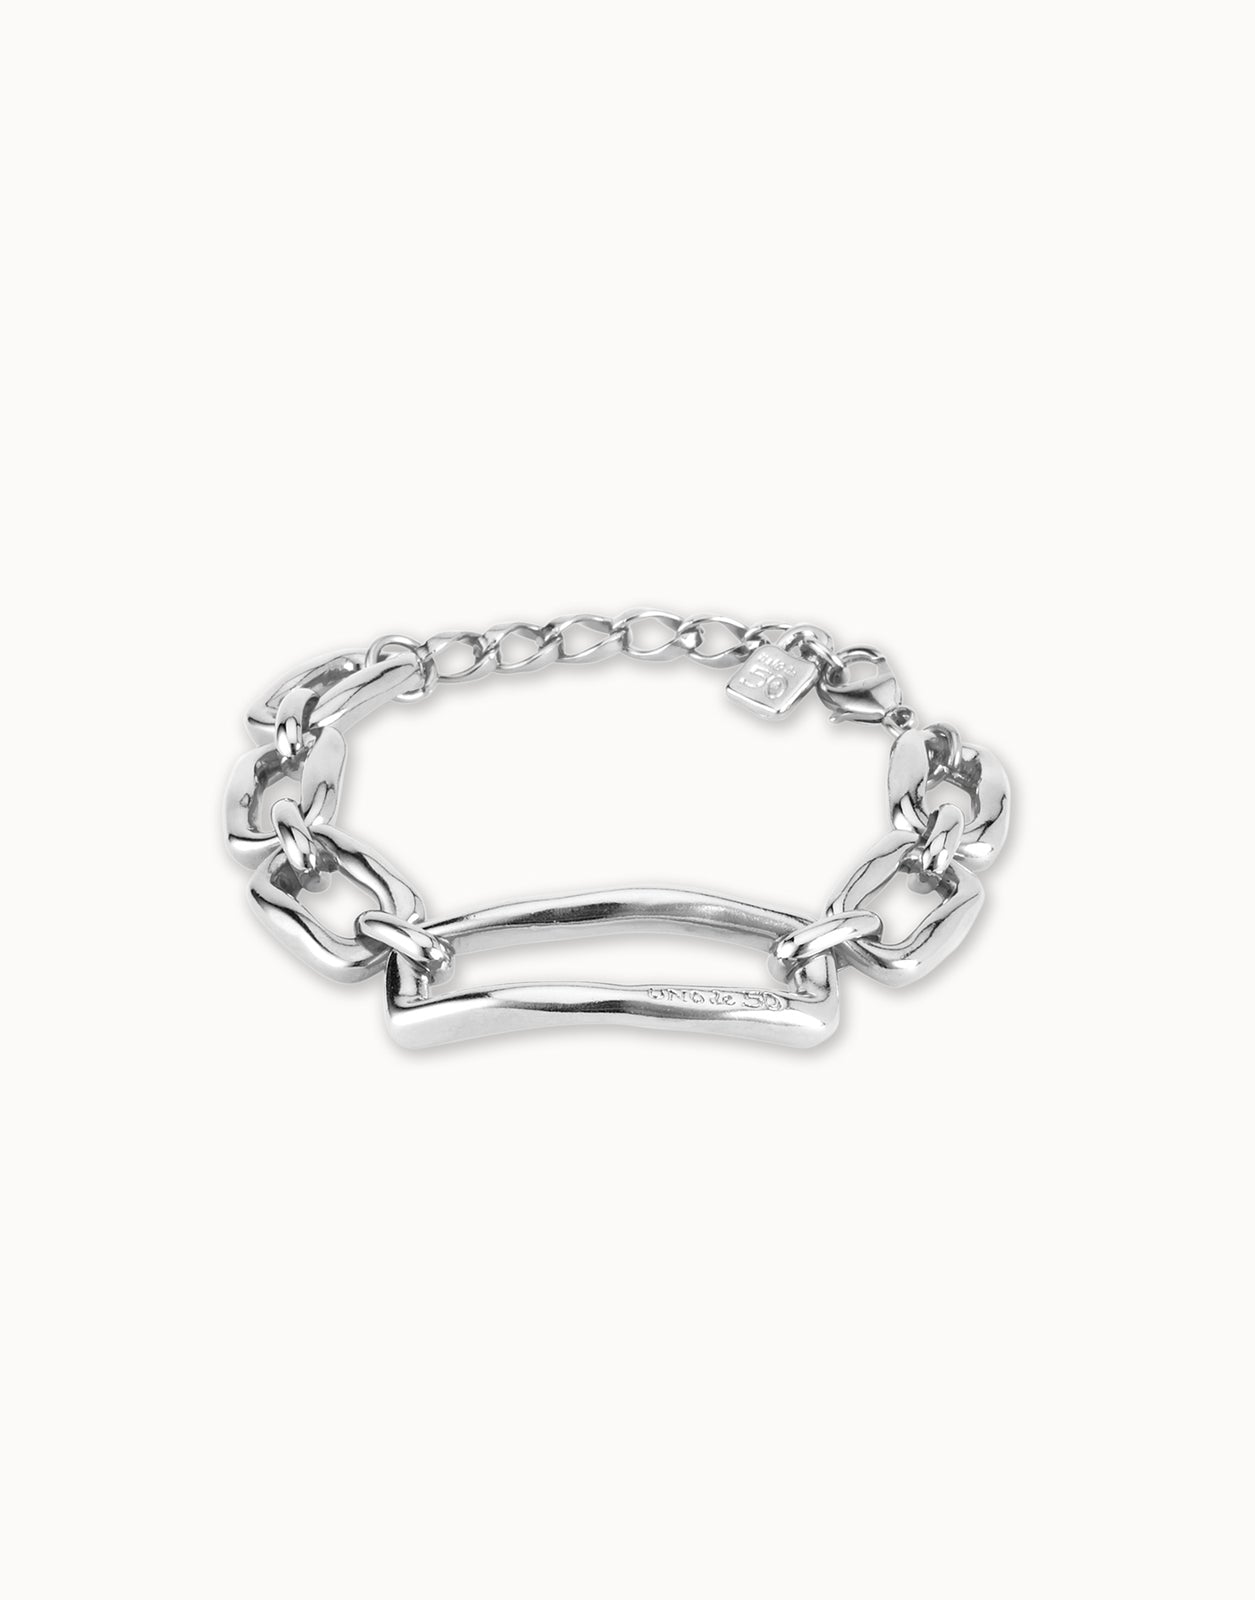 Chain Smart semi rigid bracelet